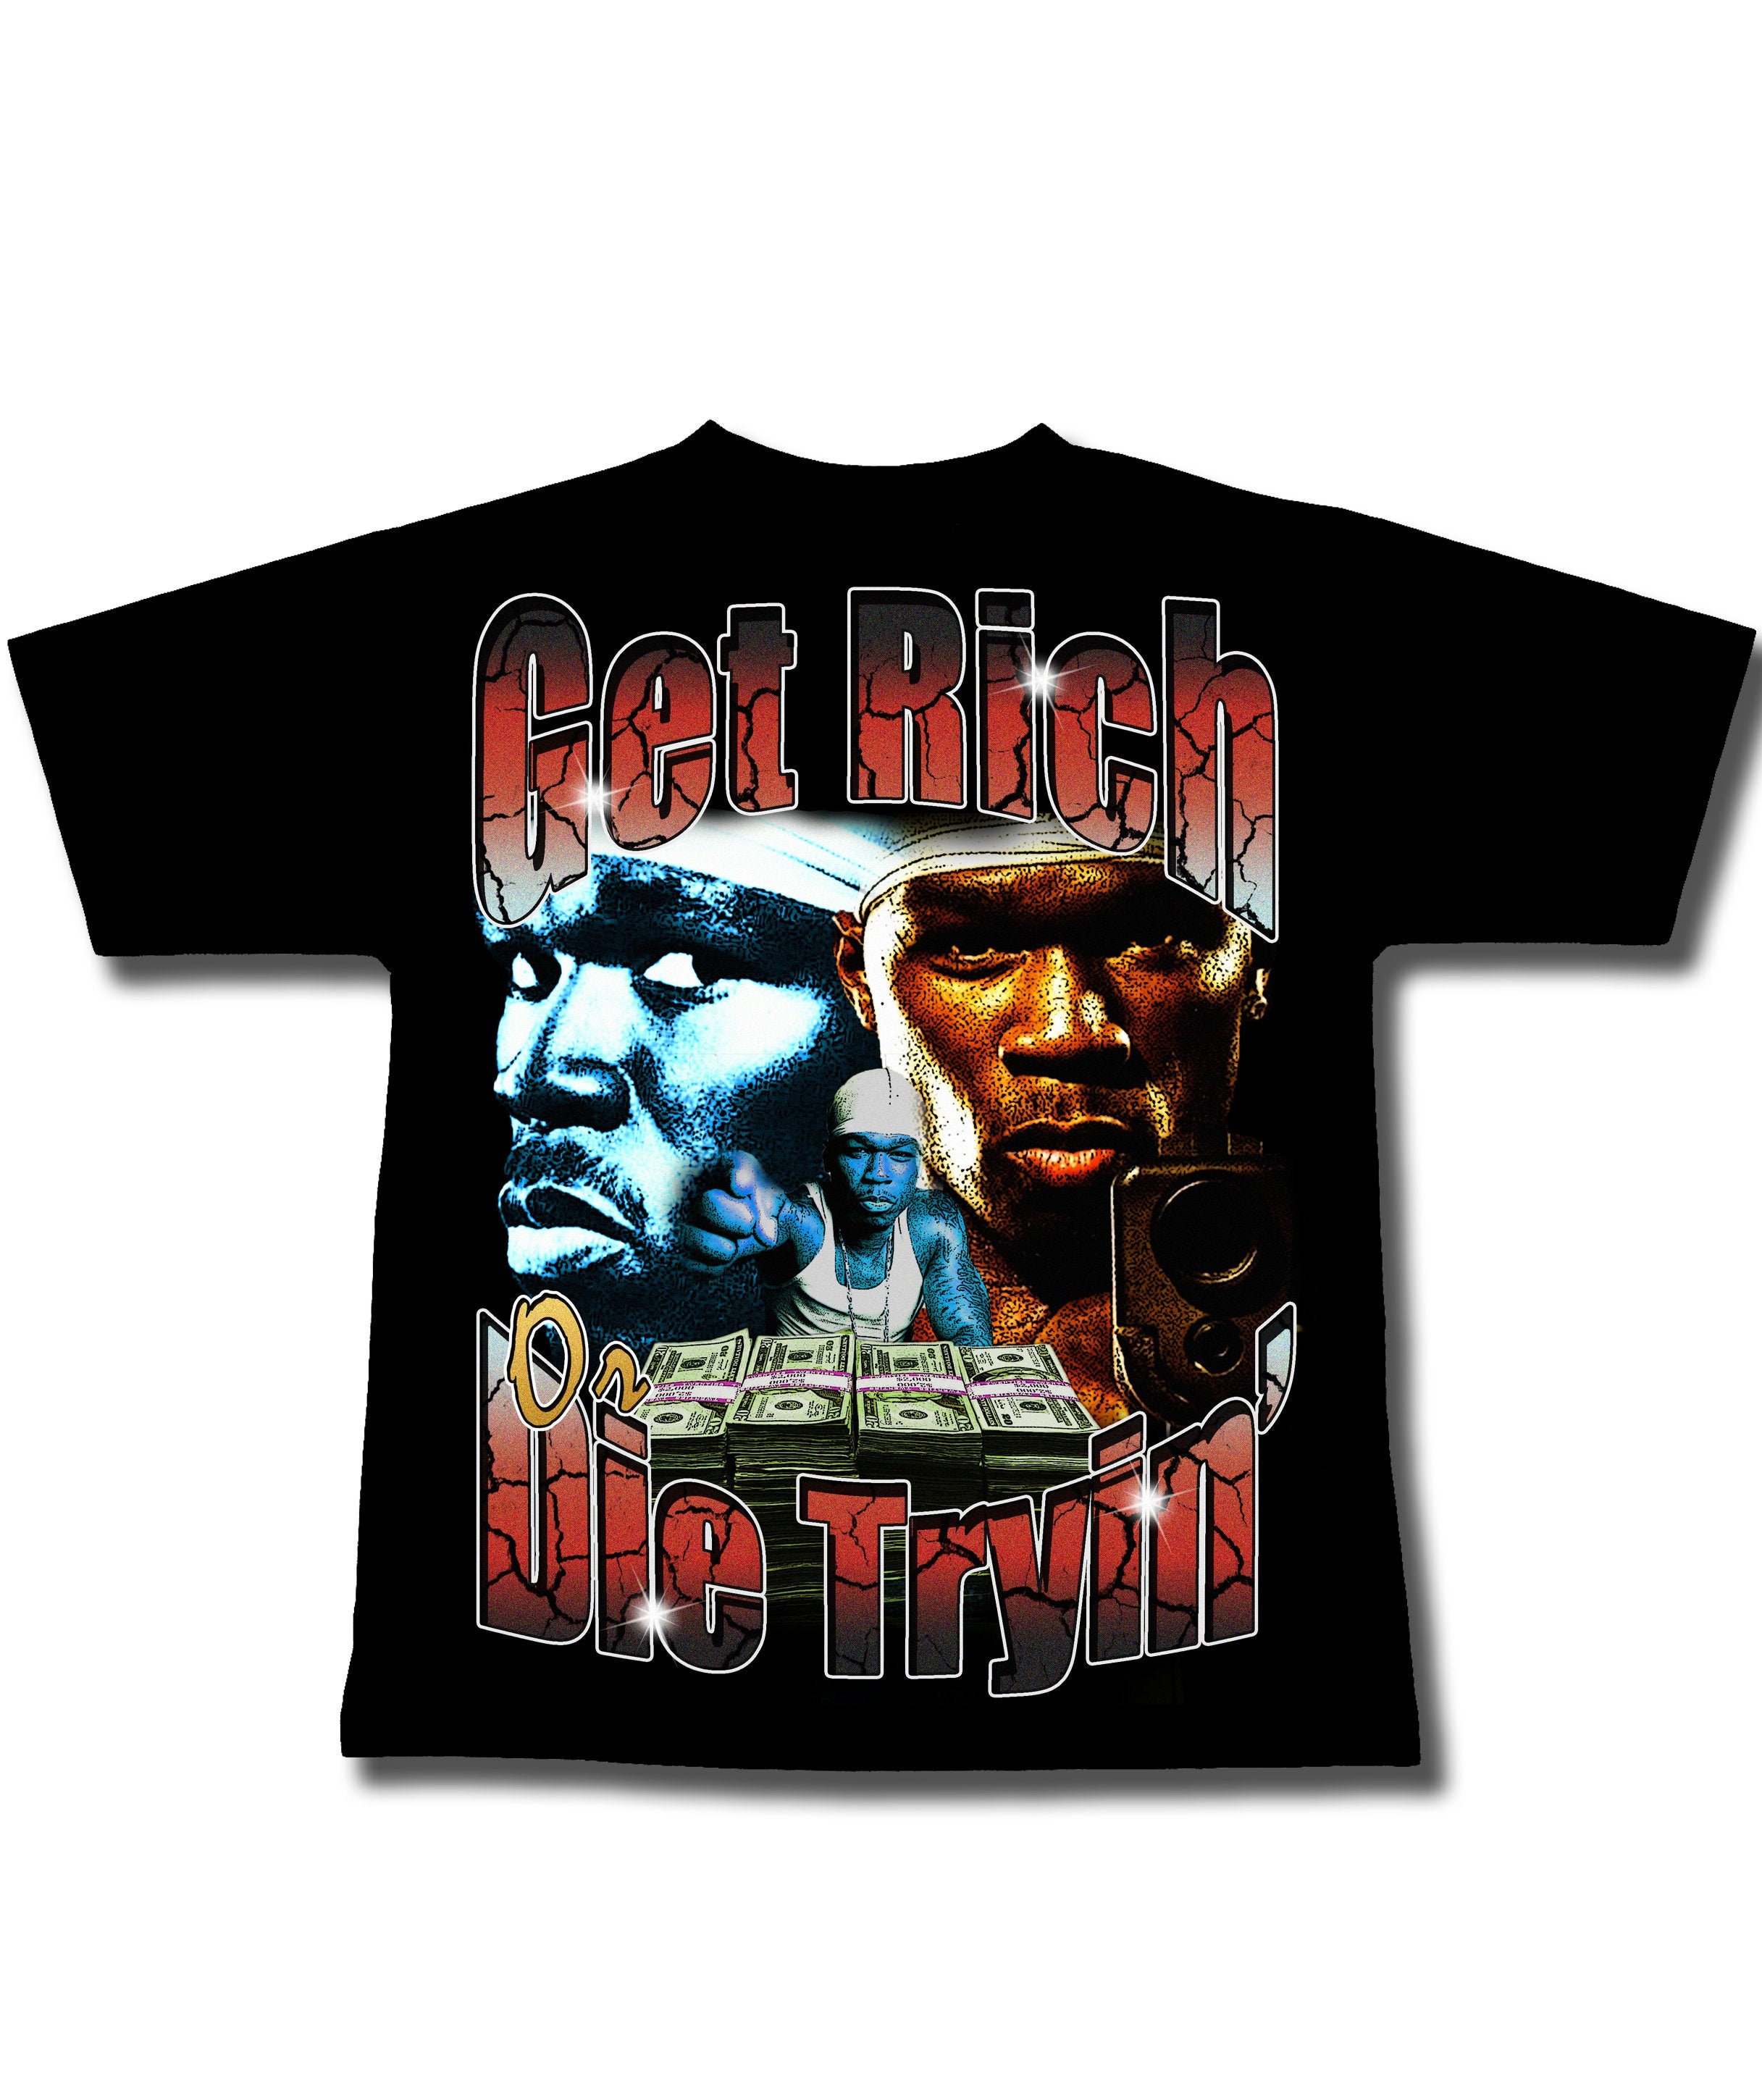 50 Cent Signature T-Shirt